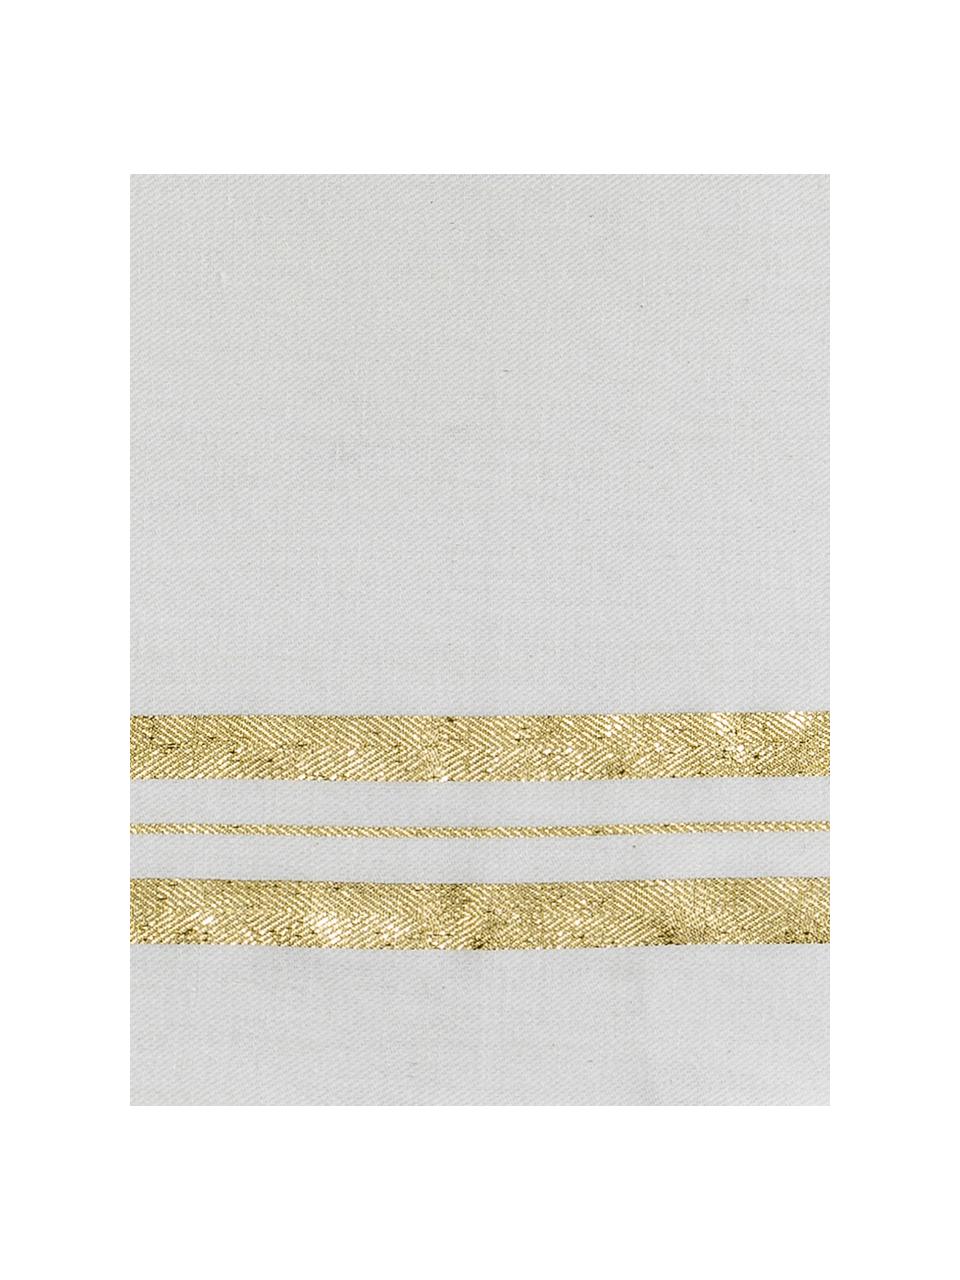 Theedoek Corinne met goudkleurige details, Katoen, Wit, goudkleurig, 50 x 70 cm